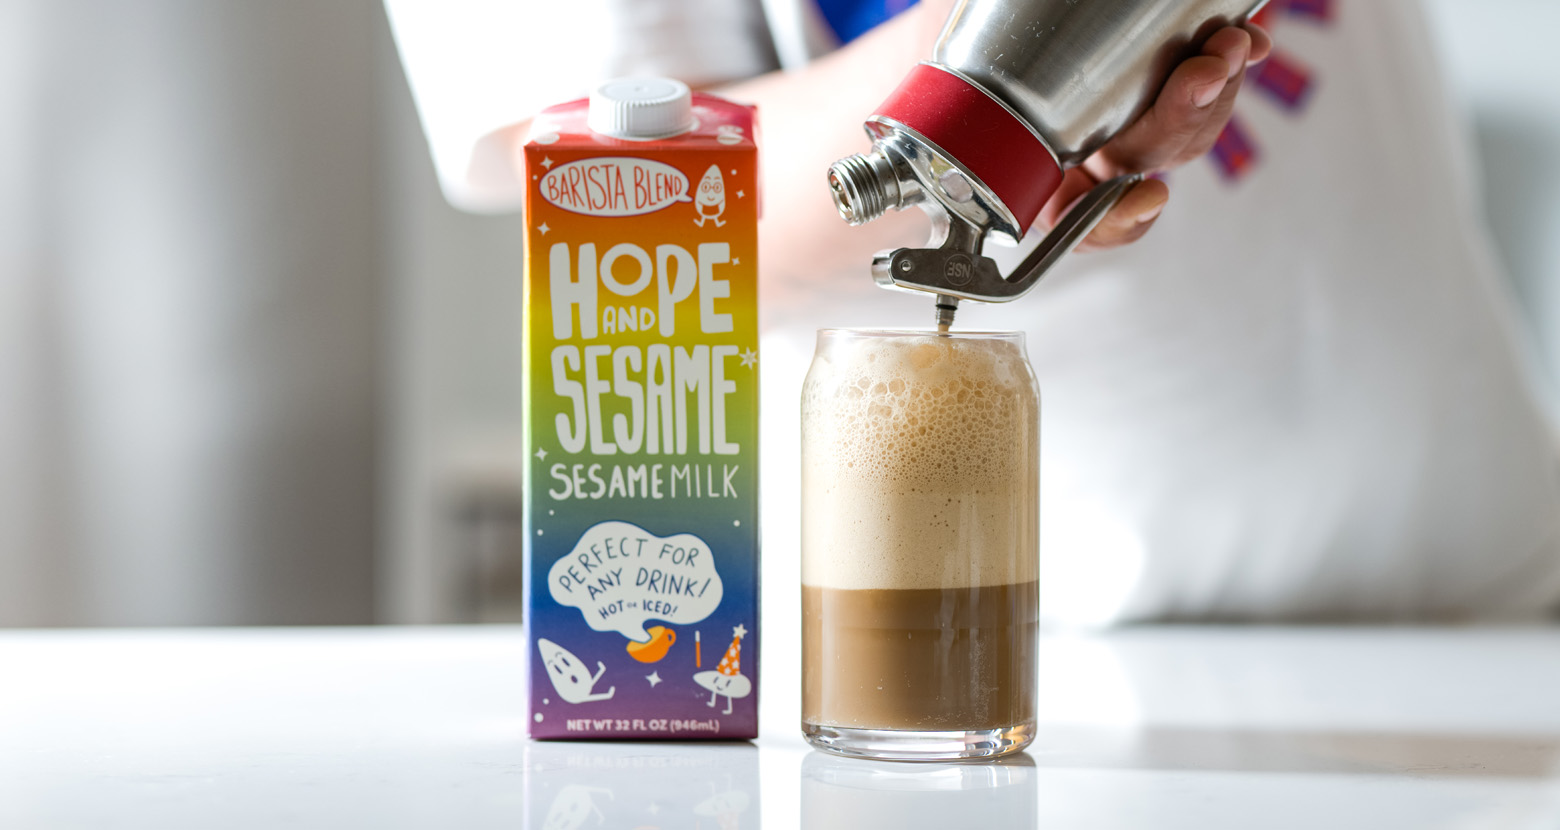 Hope and Sesame milk